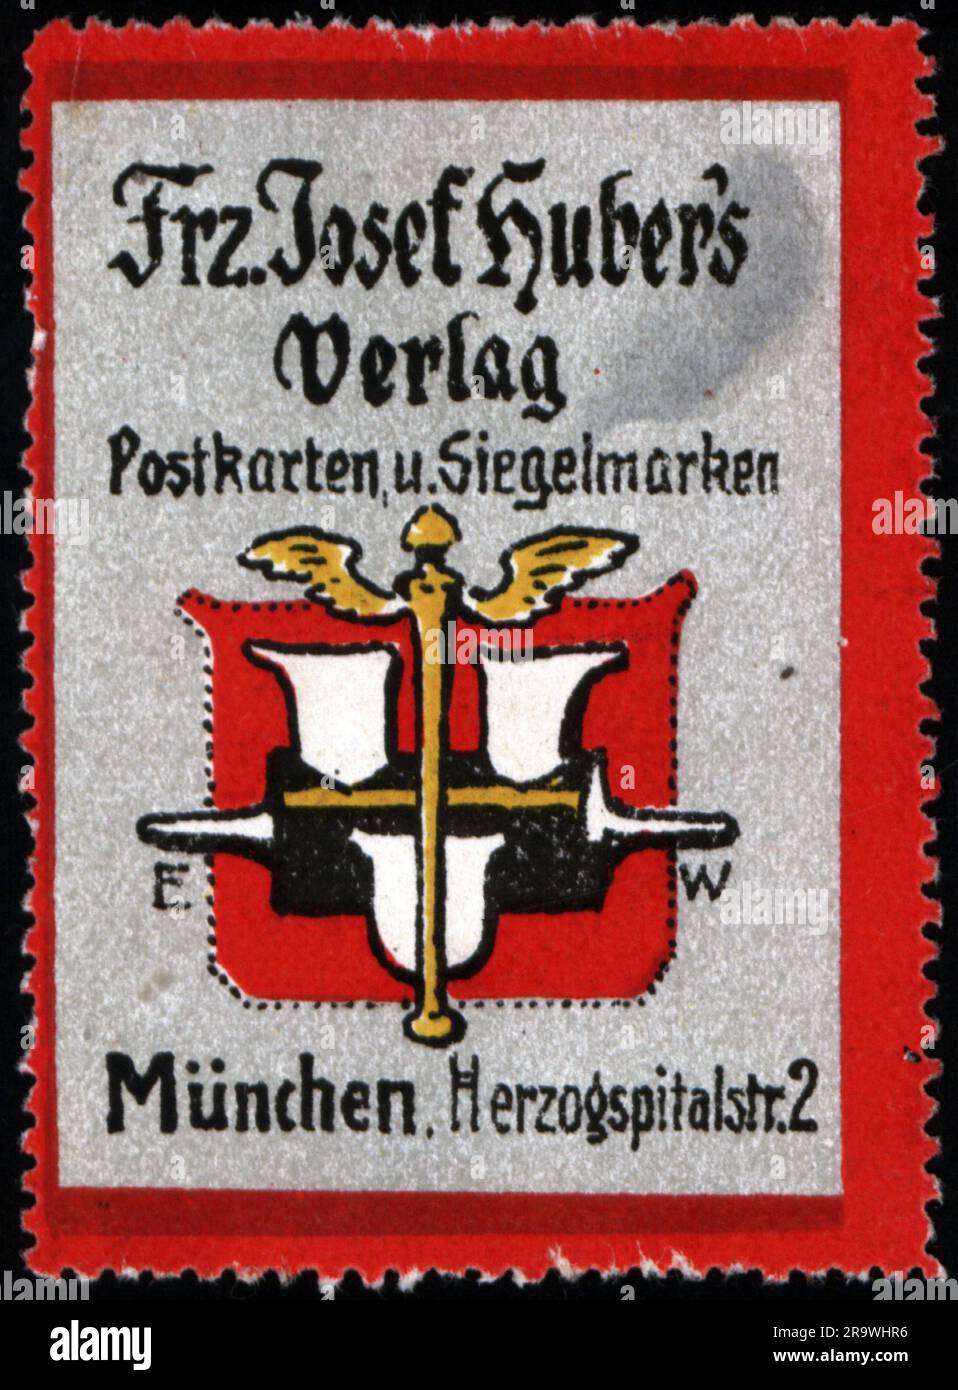 Publicidad, editoriales, editorial de Franz Josef Huber, Munich, ADDITIONAL-RIGHTS-CLEARANCE-INFO-NOT-AVAILABLE Foto de stock